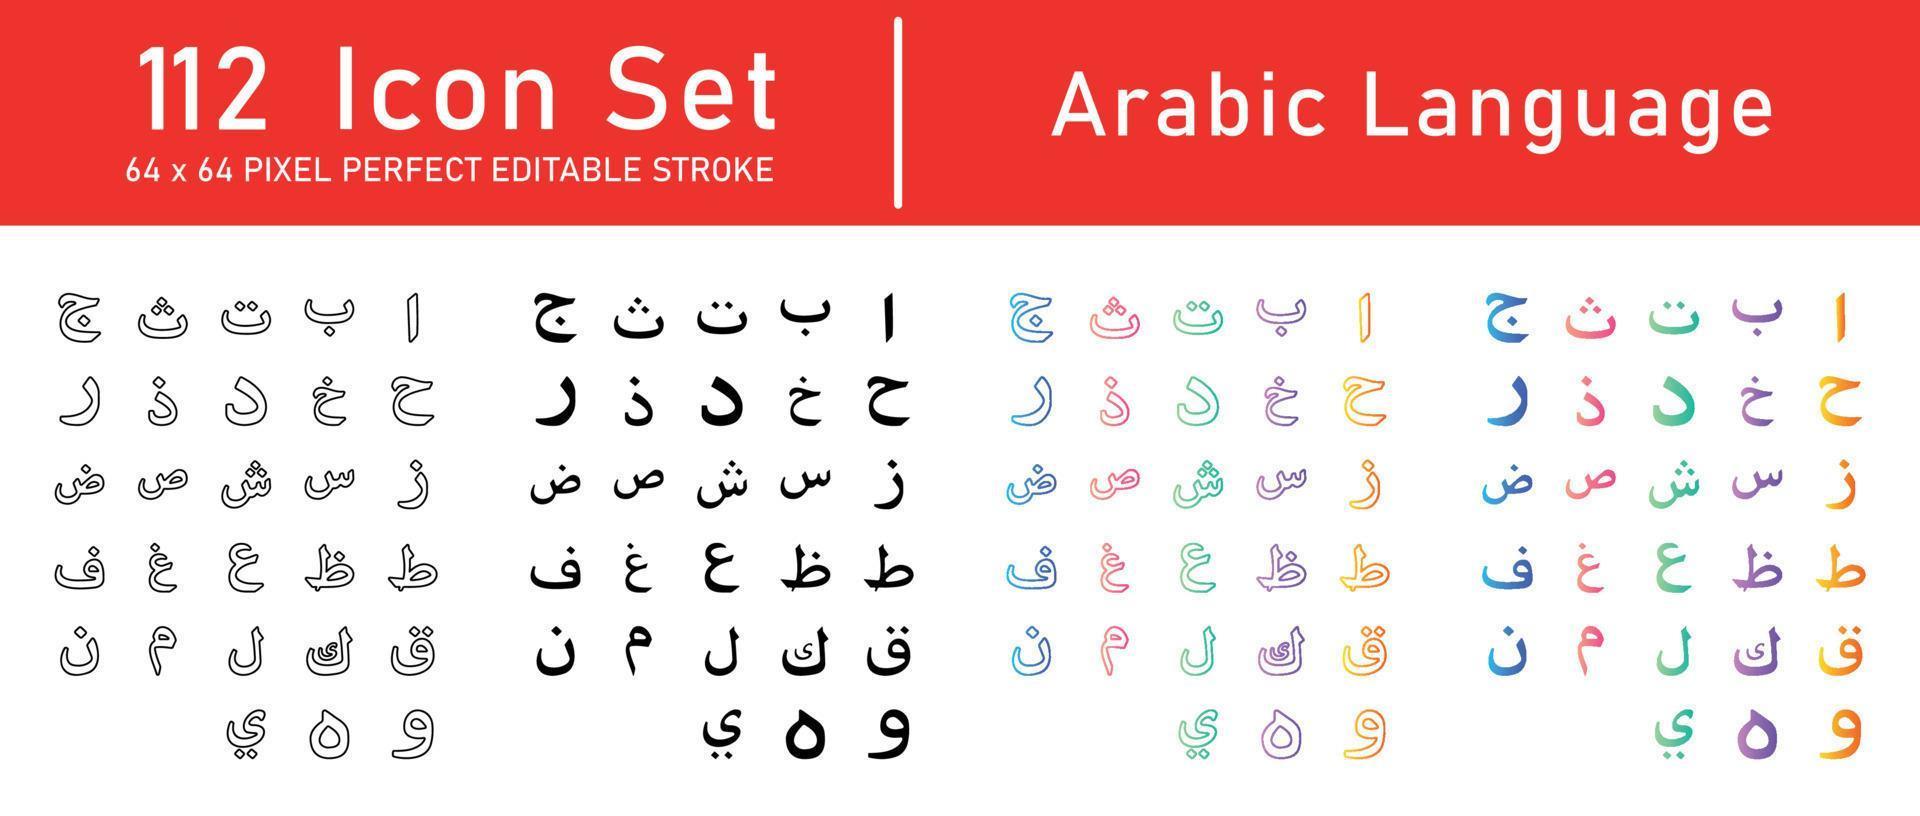 Arabic Language Icon Pack vector